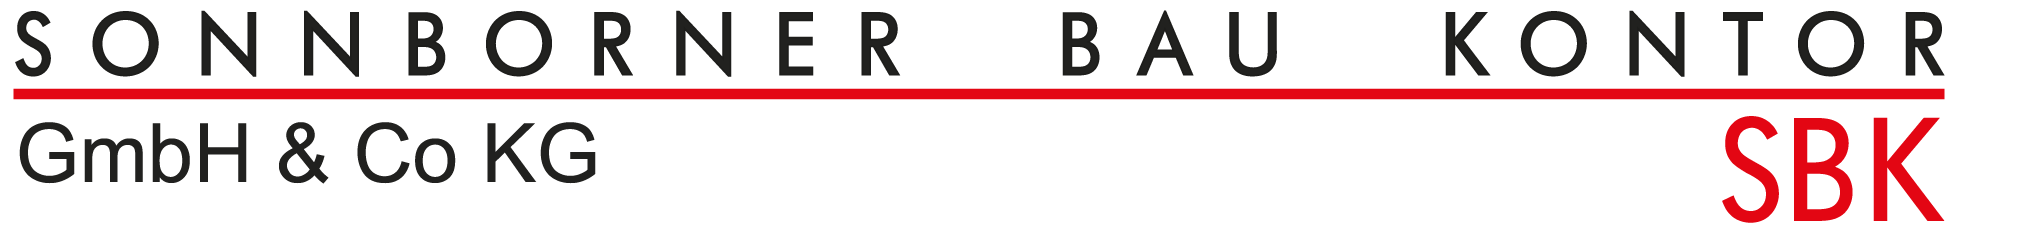 Logo Sonnborner Bau Kontor